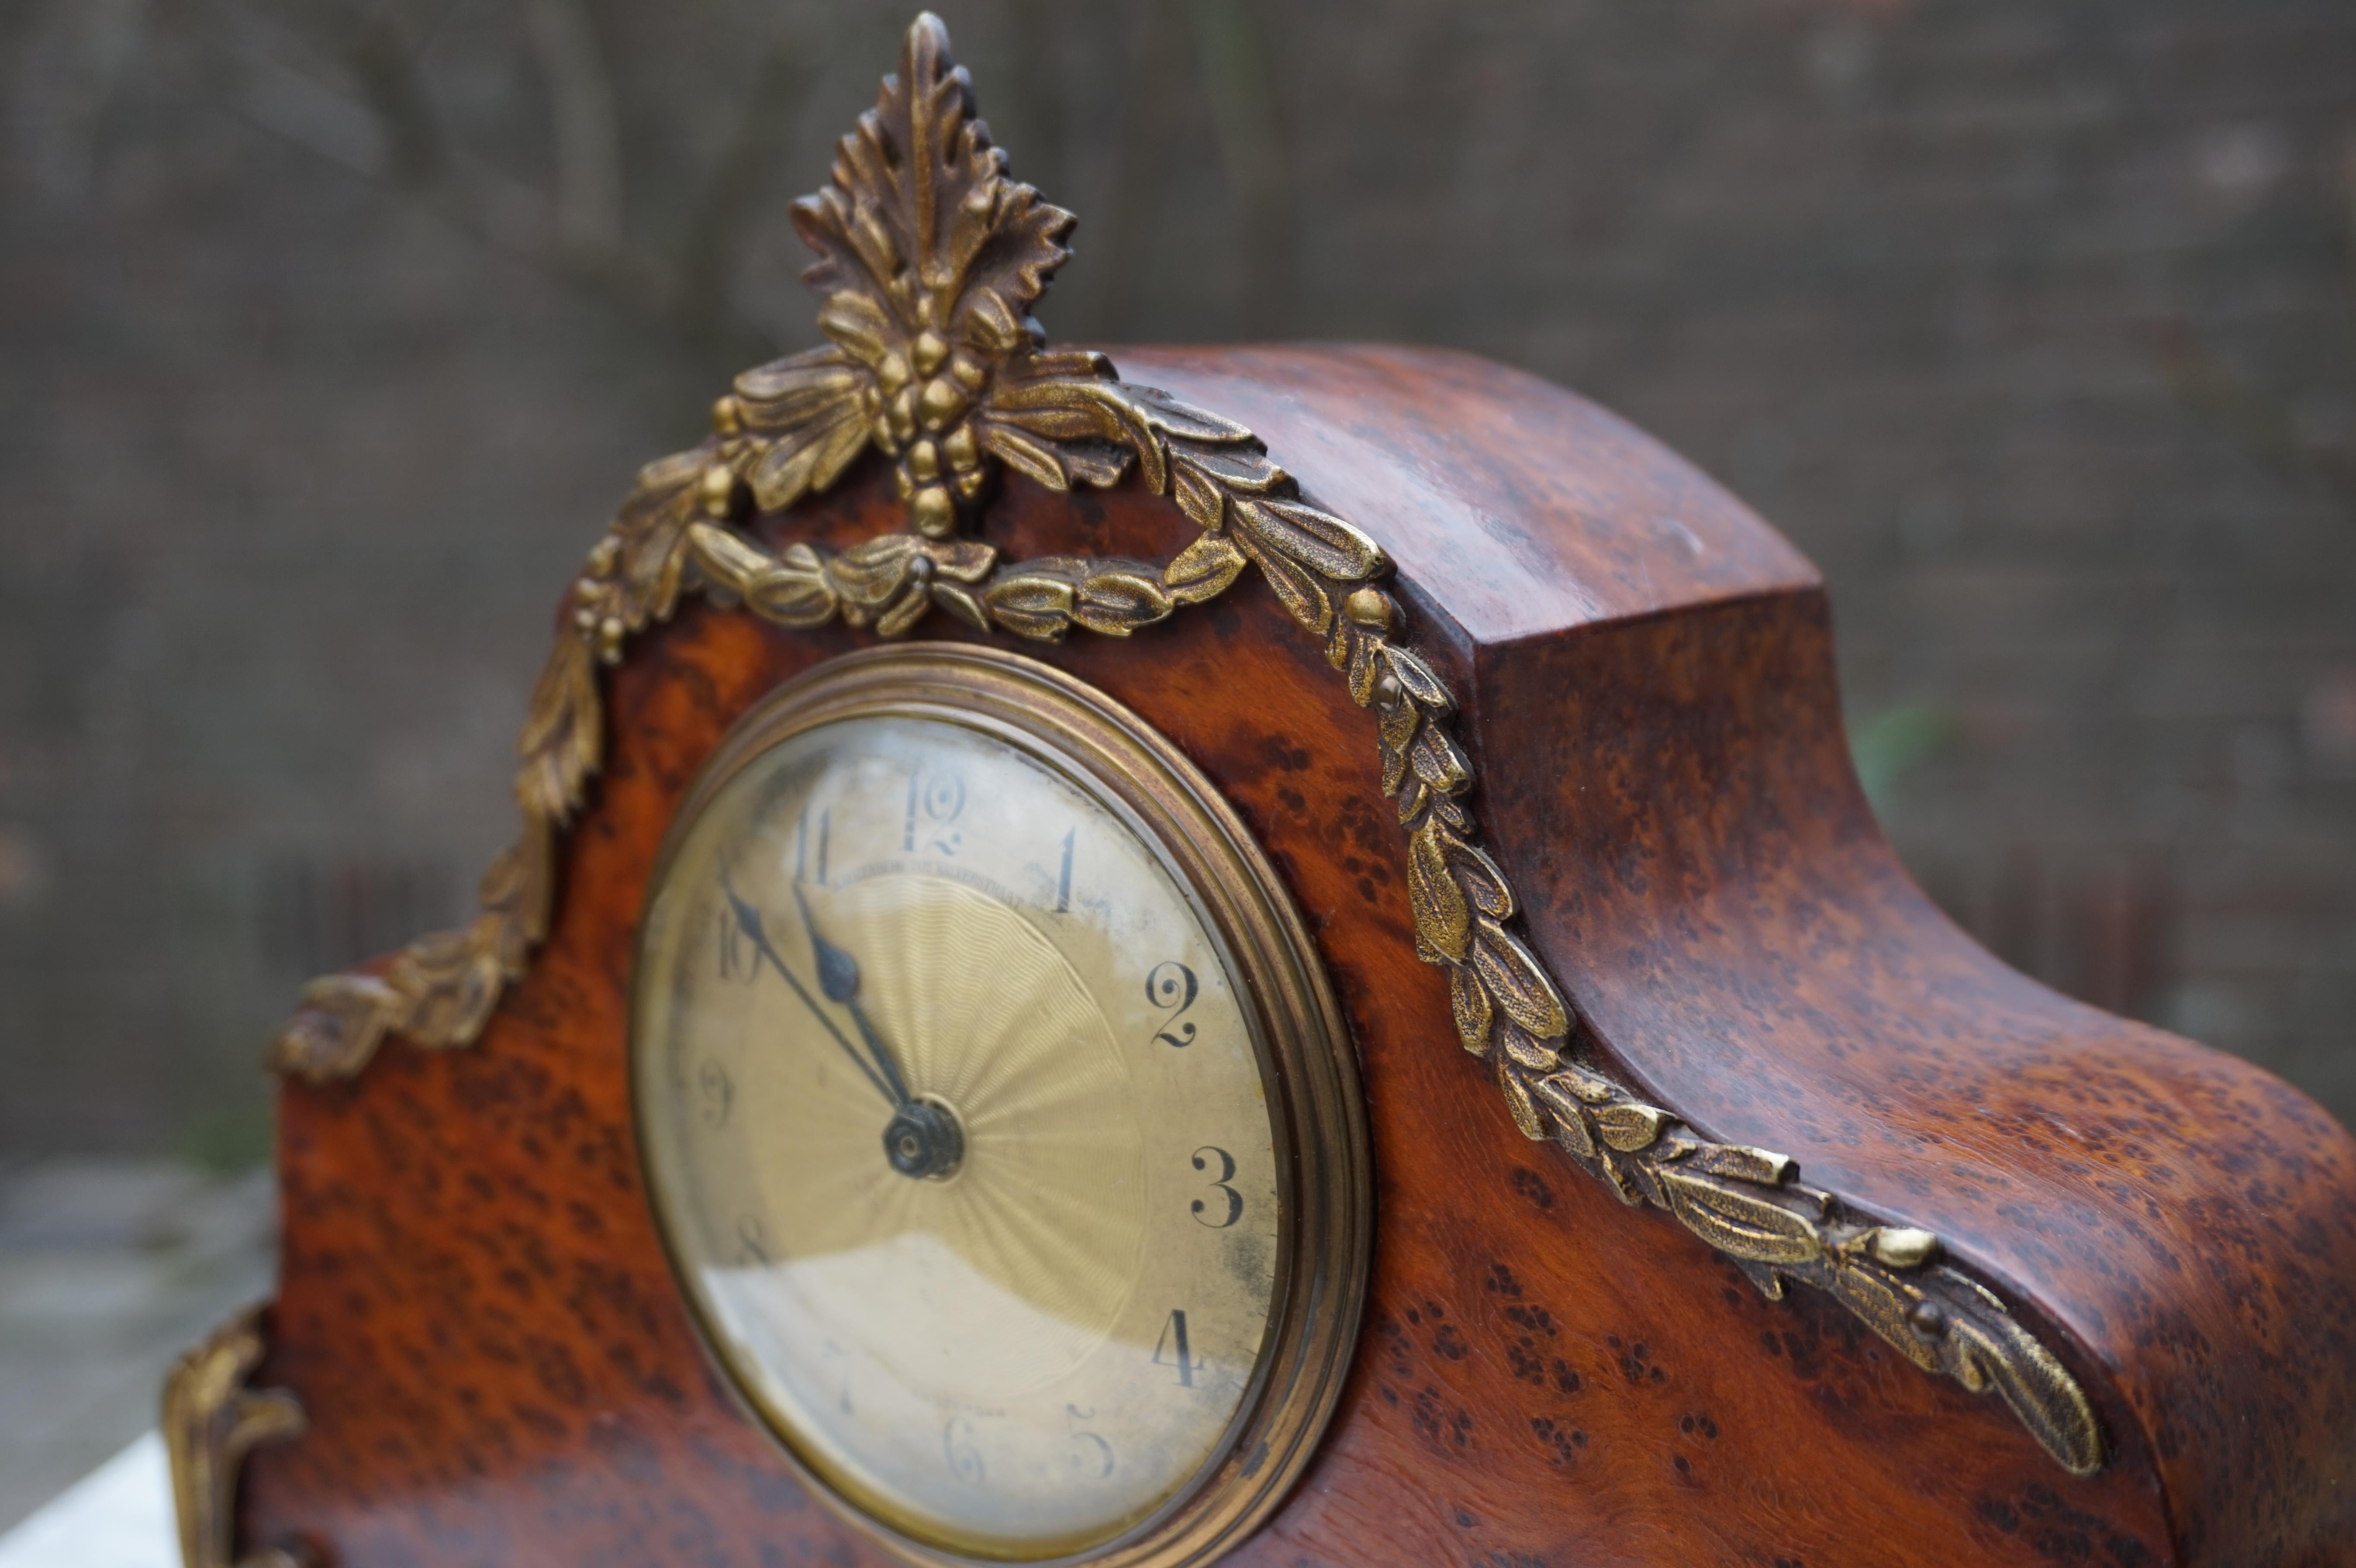 Stunning Burl Walnut Table or Mantel Clock with Stylish Bronze Feet & Ornaments 6